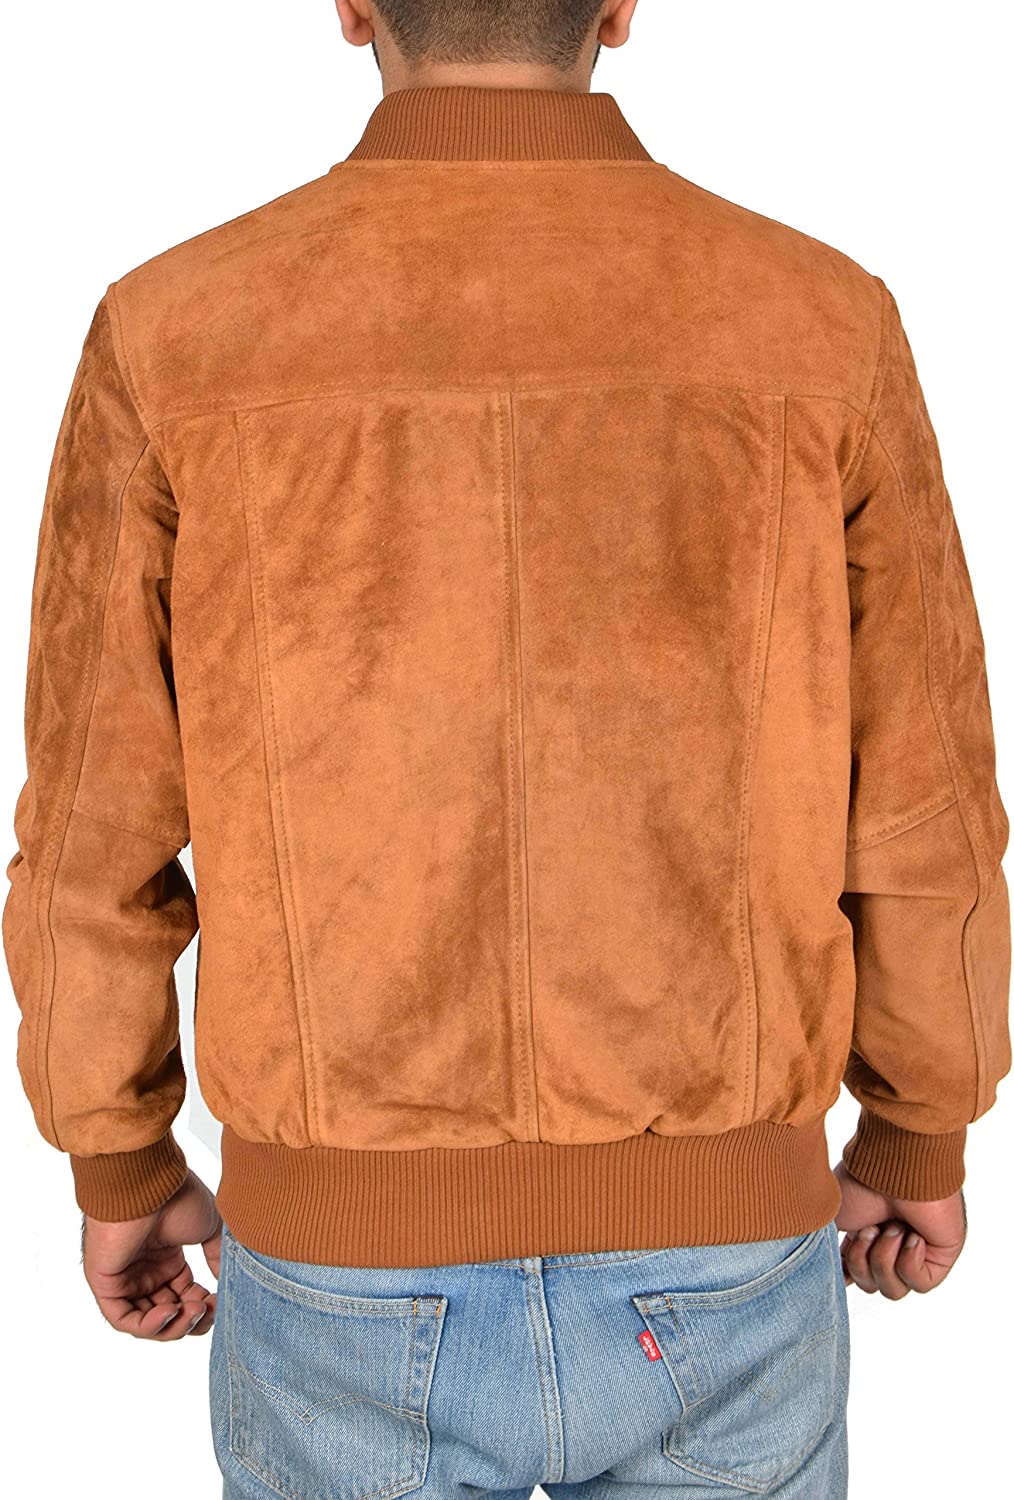 Men's Suede Bomber Jacket Classic Retro Varsity Tan Real Leather Jacket